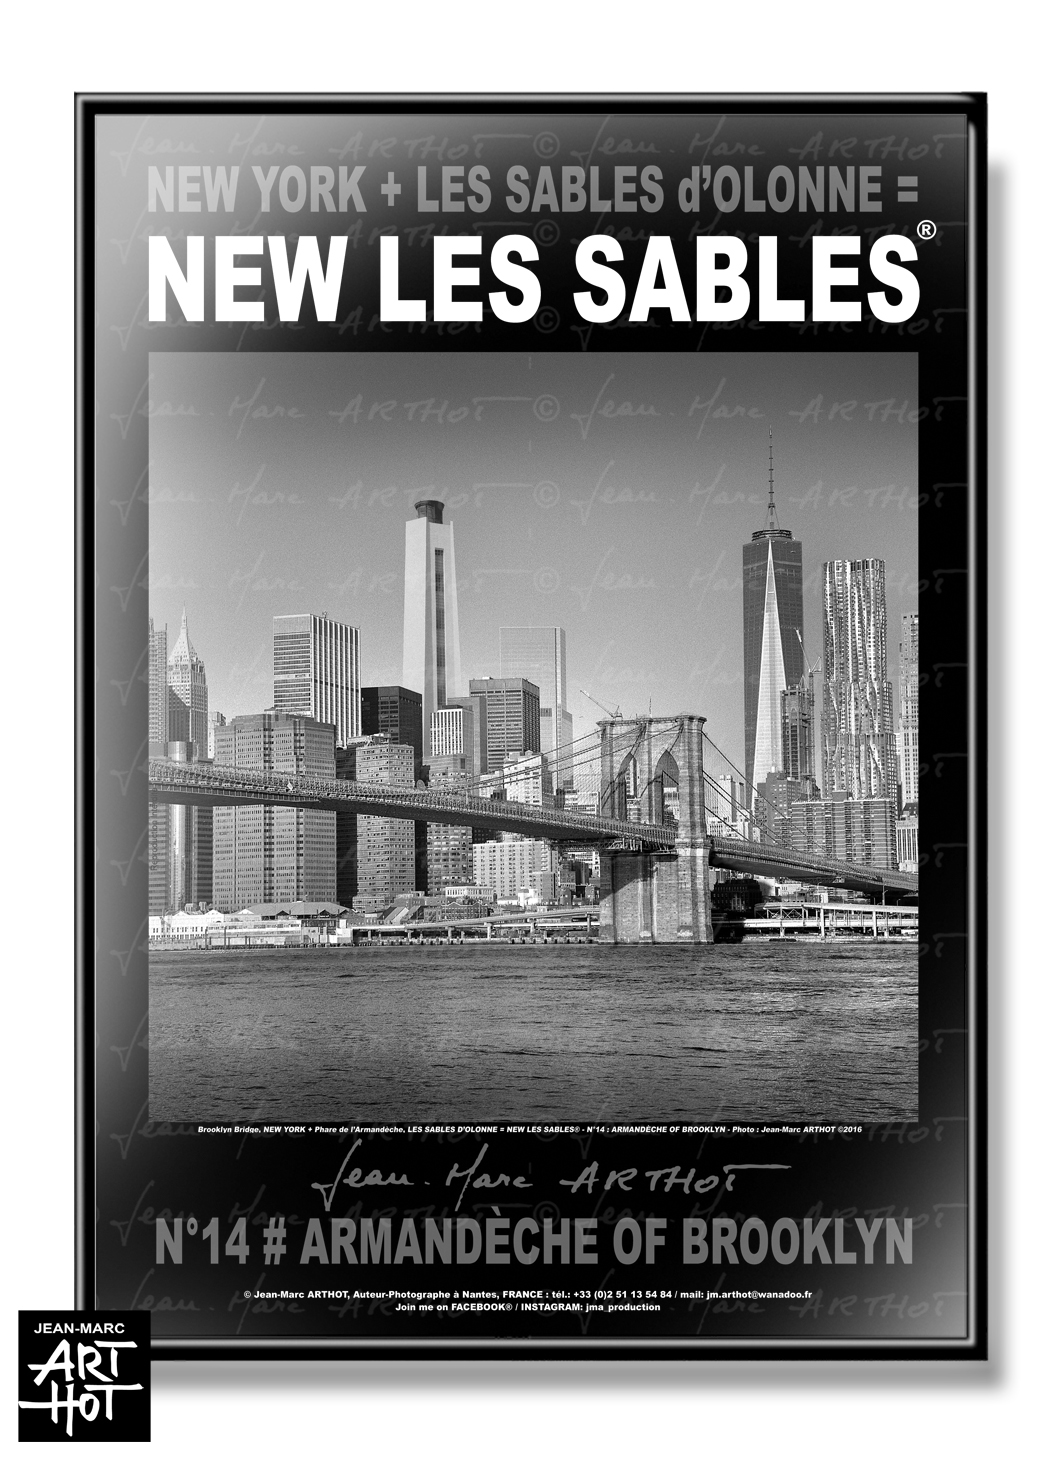 arthot-photo-art-b&w-new-york-vendee-sables-olonne-newlessables-014-armandeche-brooklyn-AFFICHE